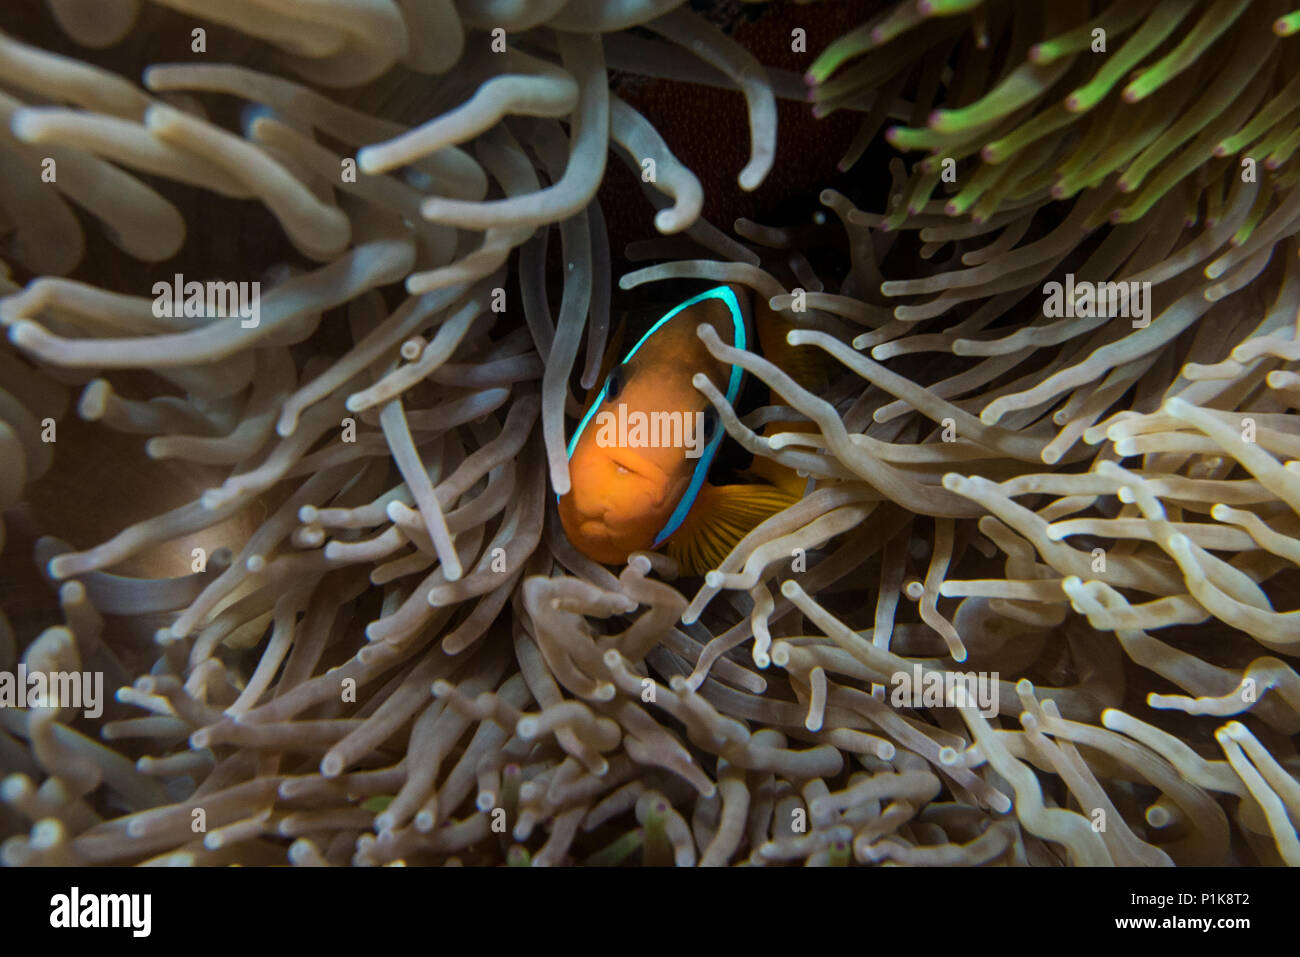 Clownfish hiding in coral reef, Lady Elliot Island, Great Barrier Reef, Australia Stock Photo